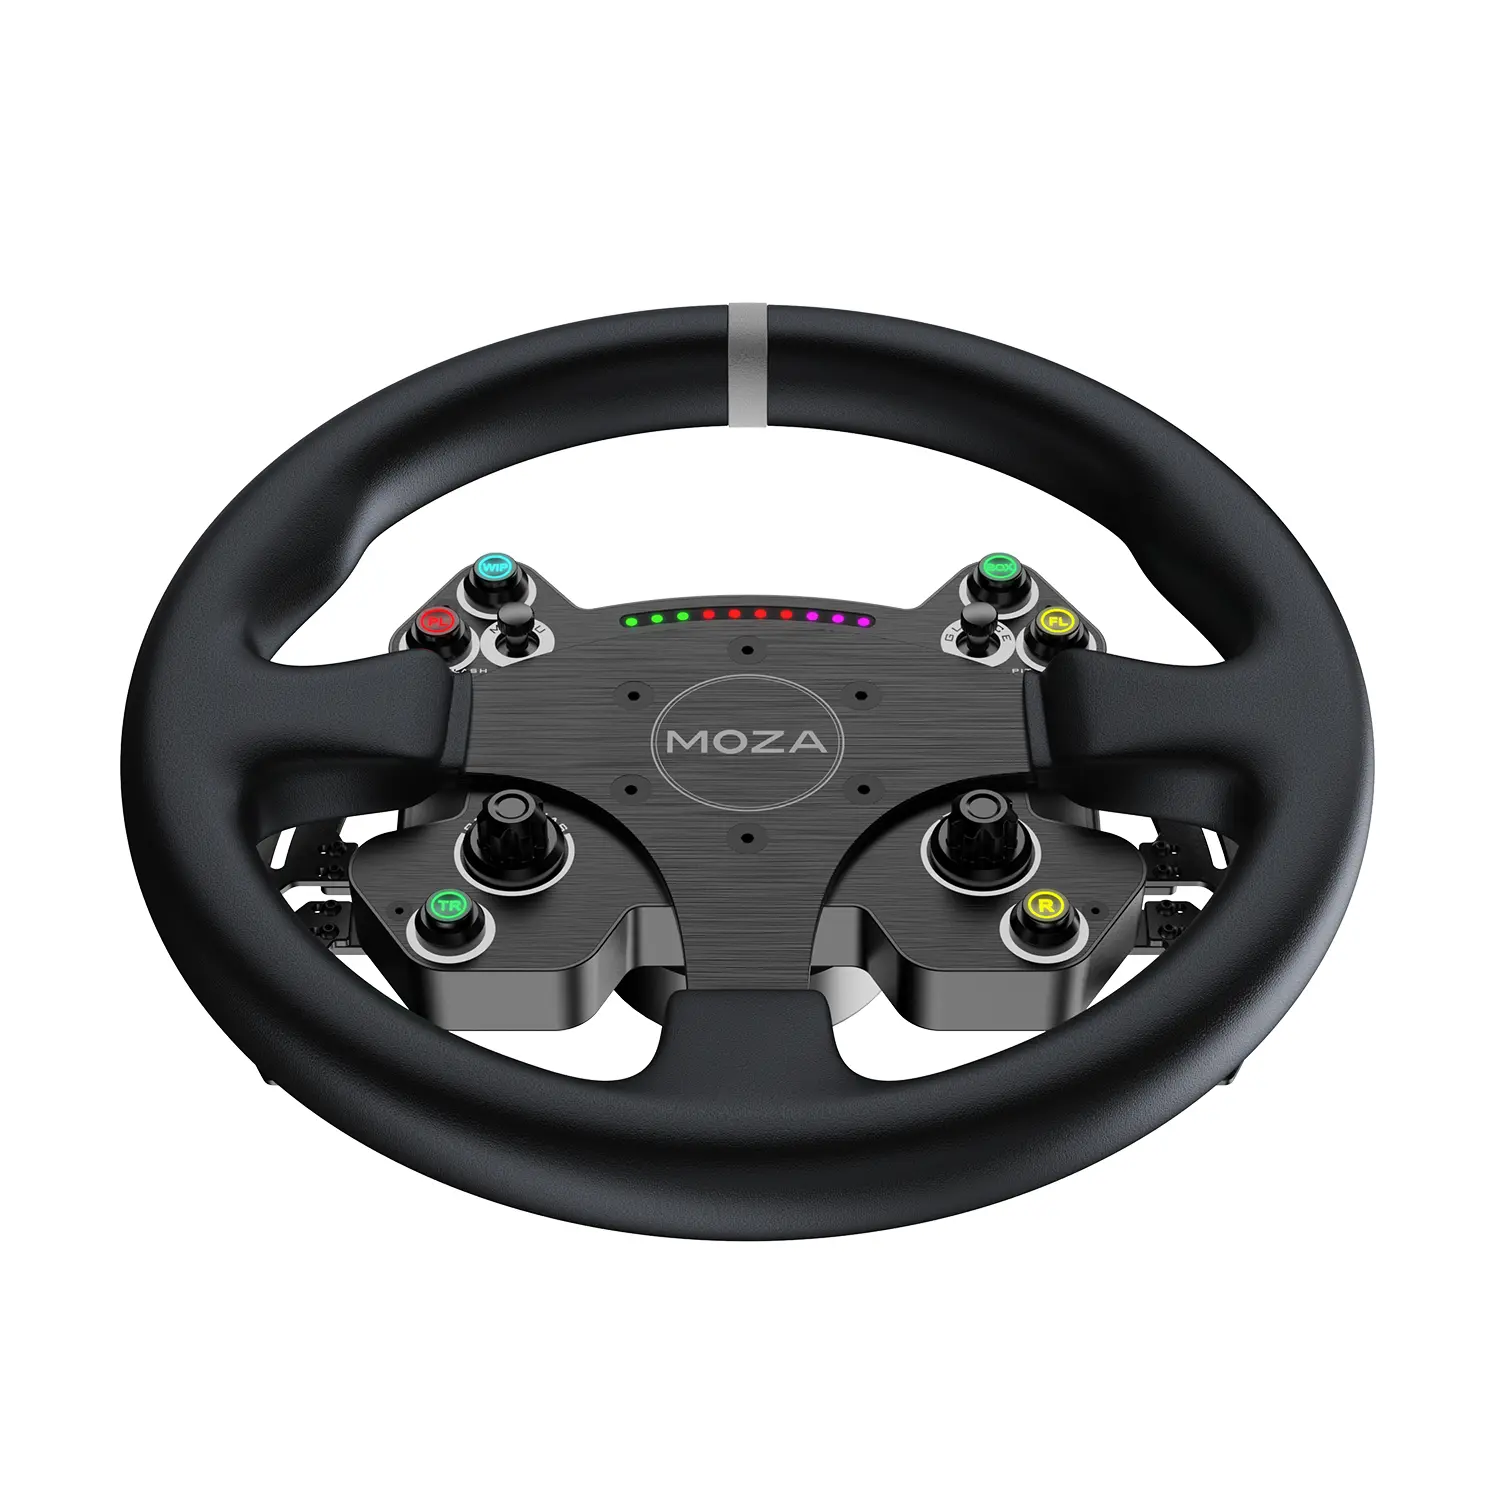 Moza Racing GS V2P Steering Wheel Leather フォーミュラー 国内正規品